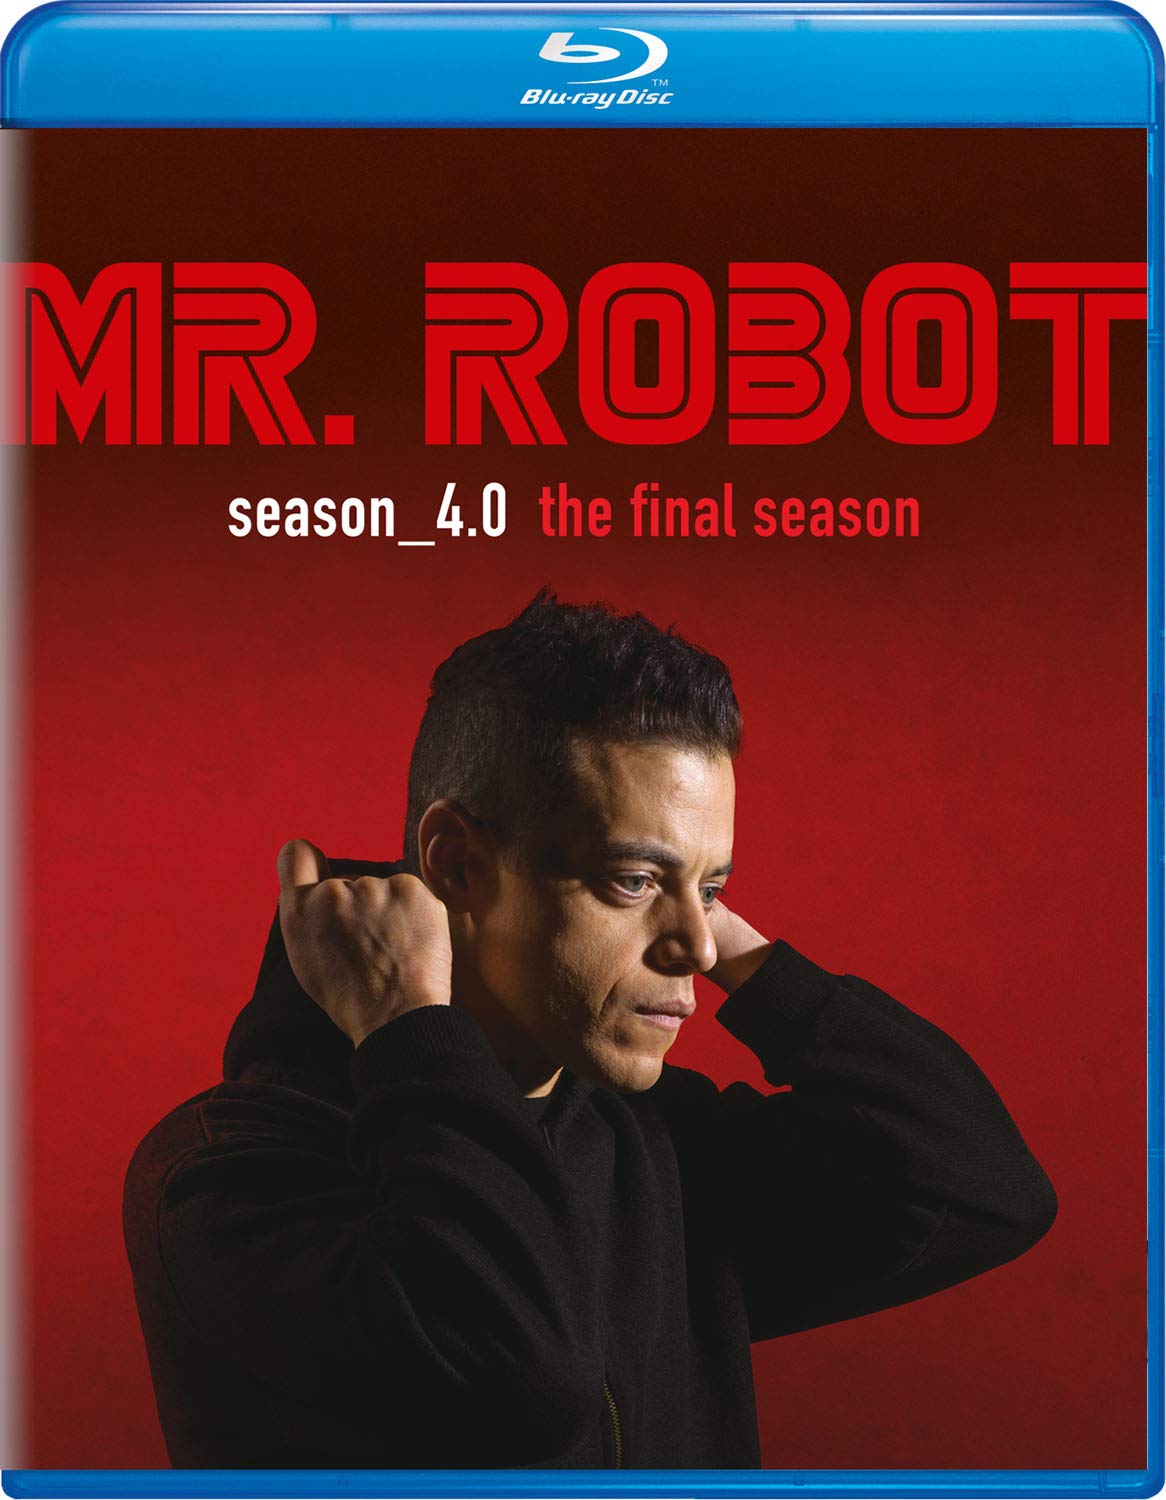 Mr Robot Season 4 BluRay $11.99 + Free Shipping w/Prime or $25